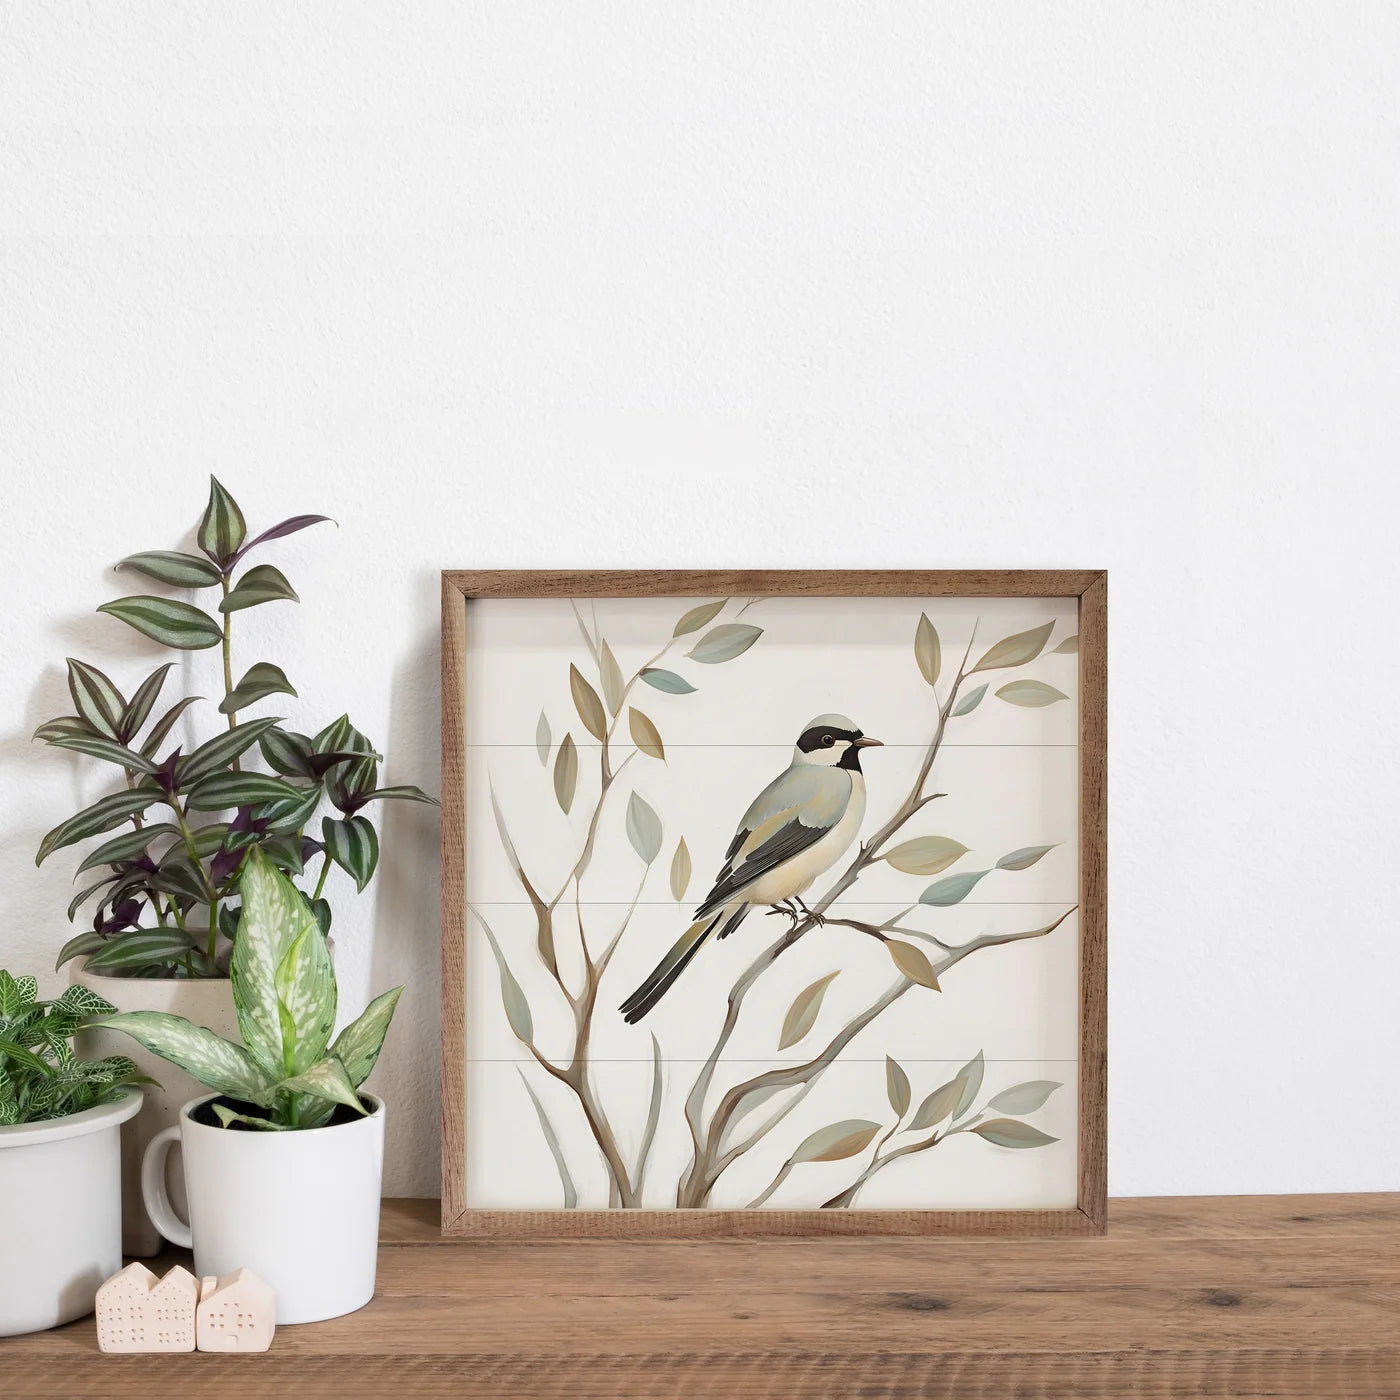 Solo Bird On Branch Wood Framed Print